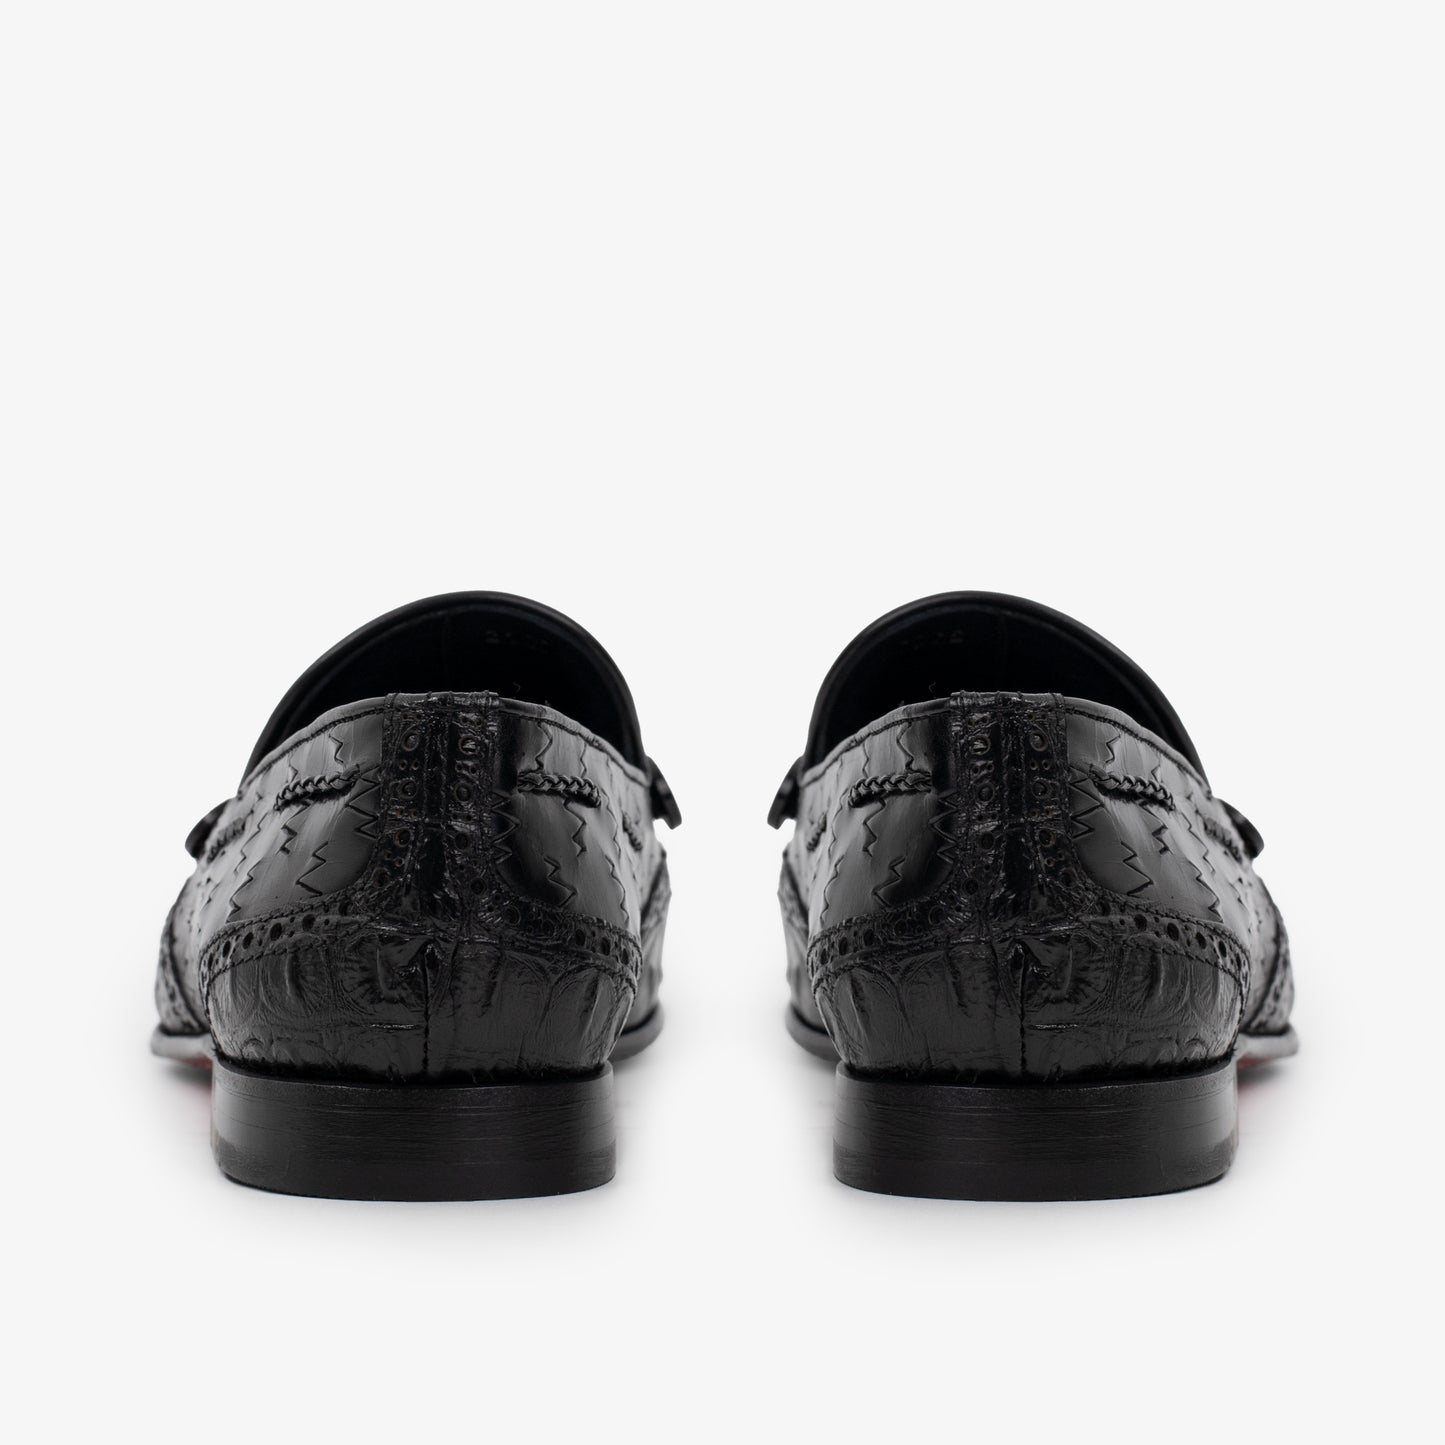 The Istanbul Black Leather Tassel Loafer Men Shoe